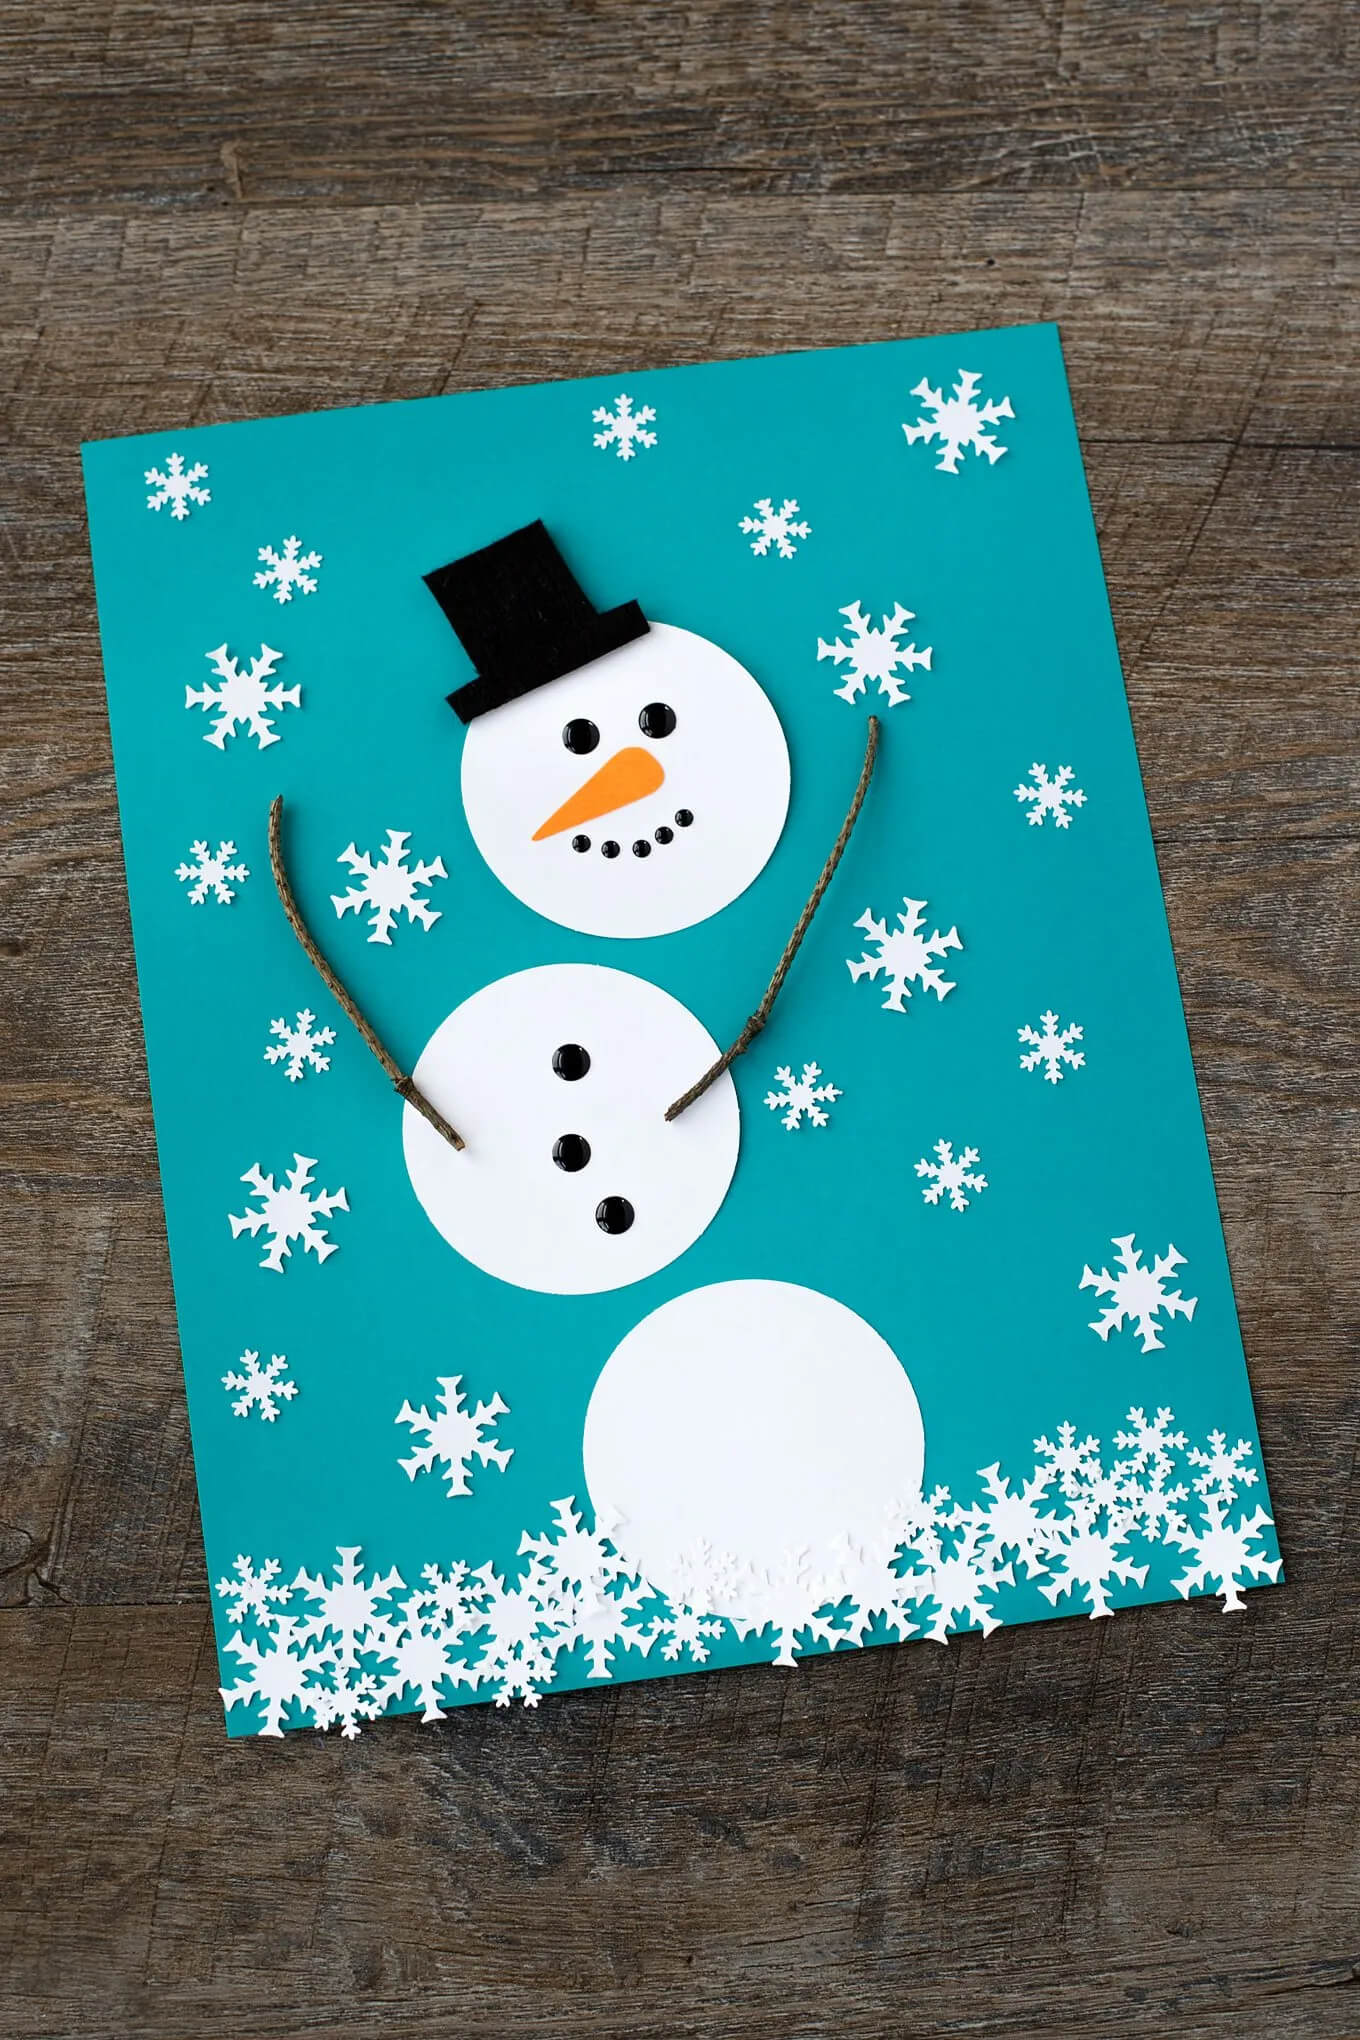 Make An Adorable Snowman Craft Using Construction PaperWinter Crafts With Construction Paper